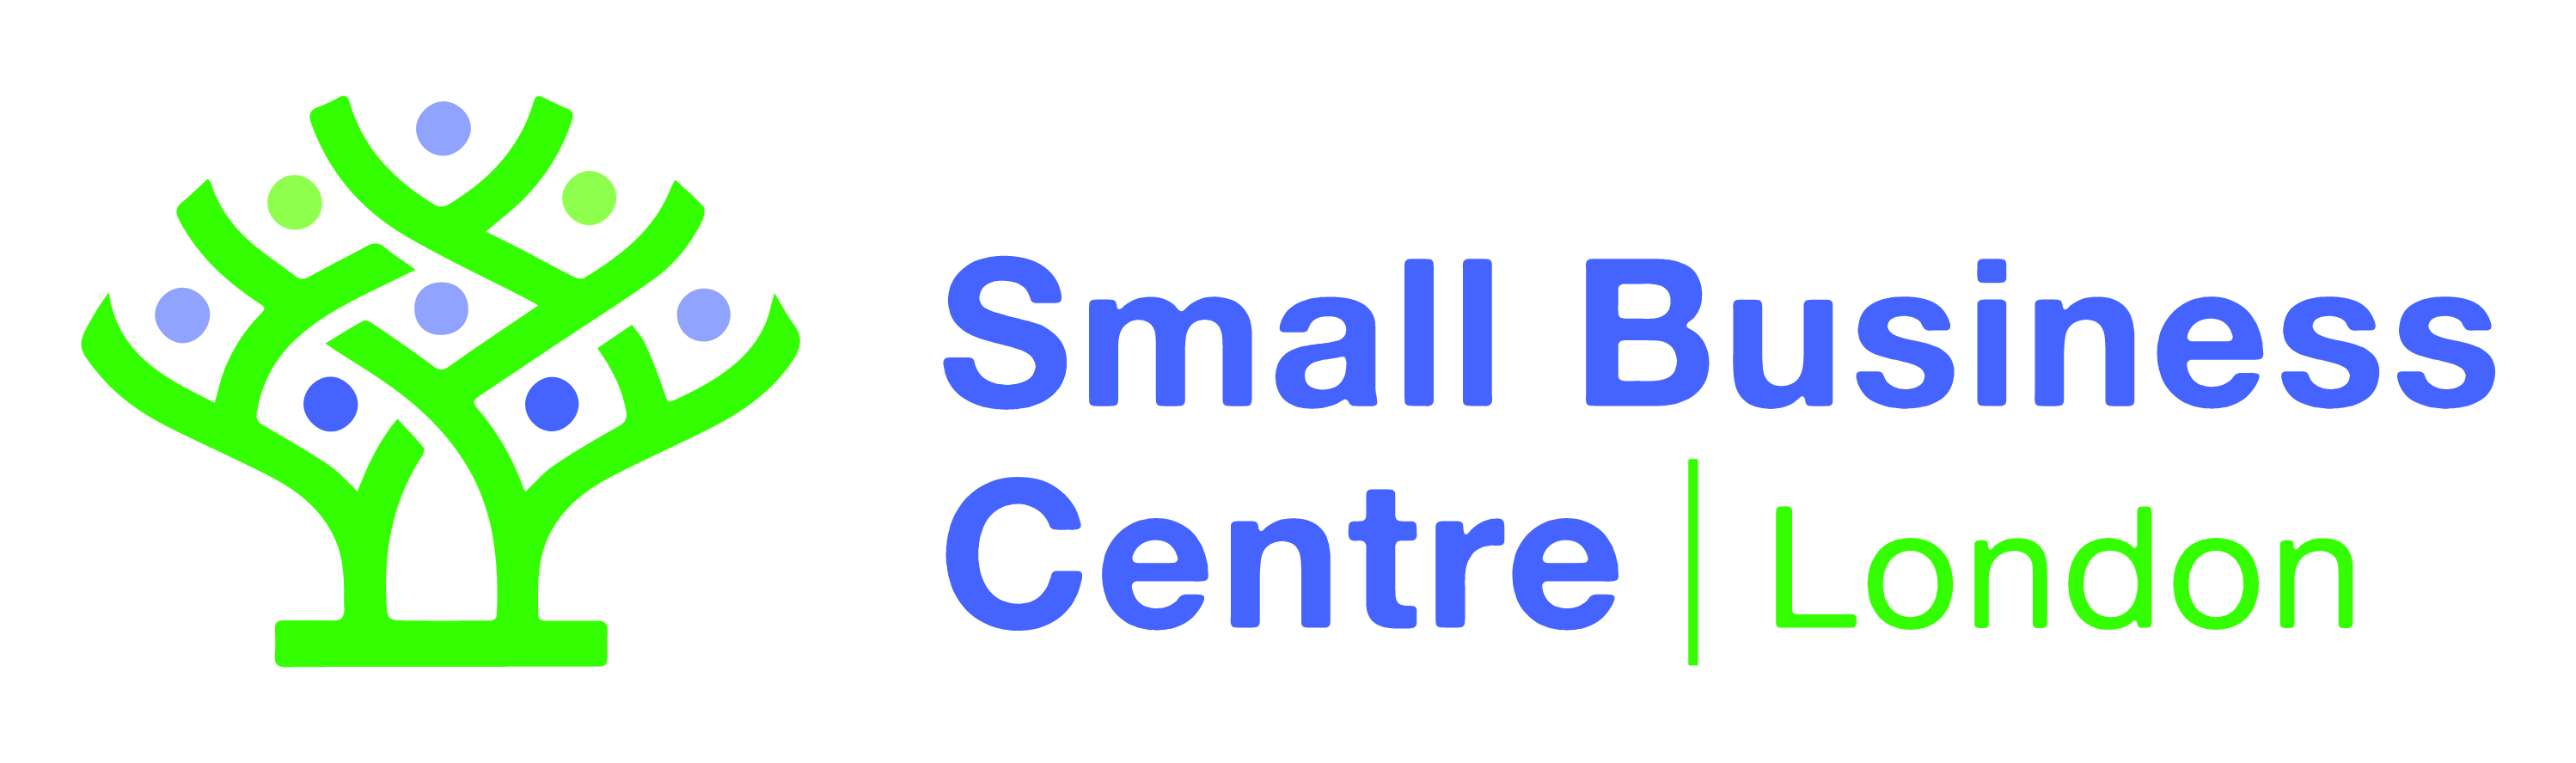 Small Business Center London Logo